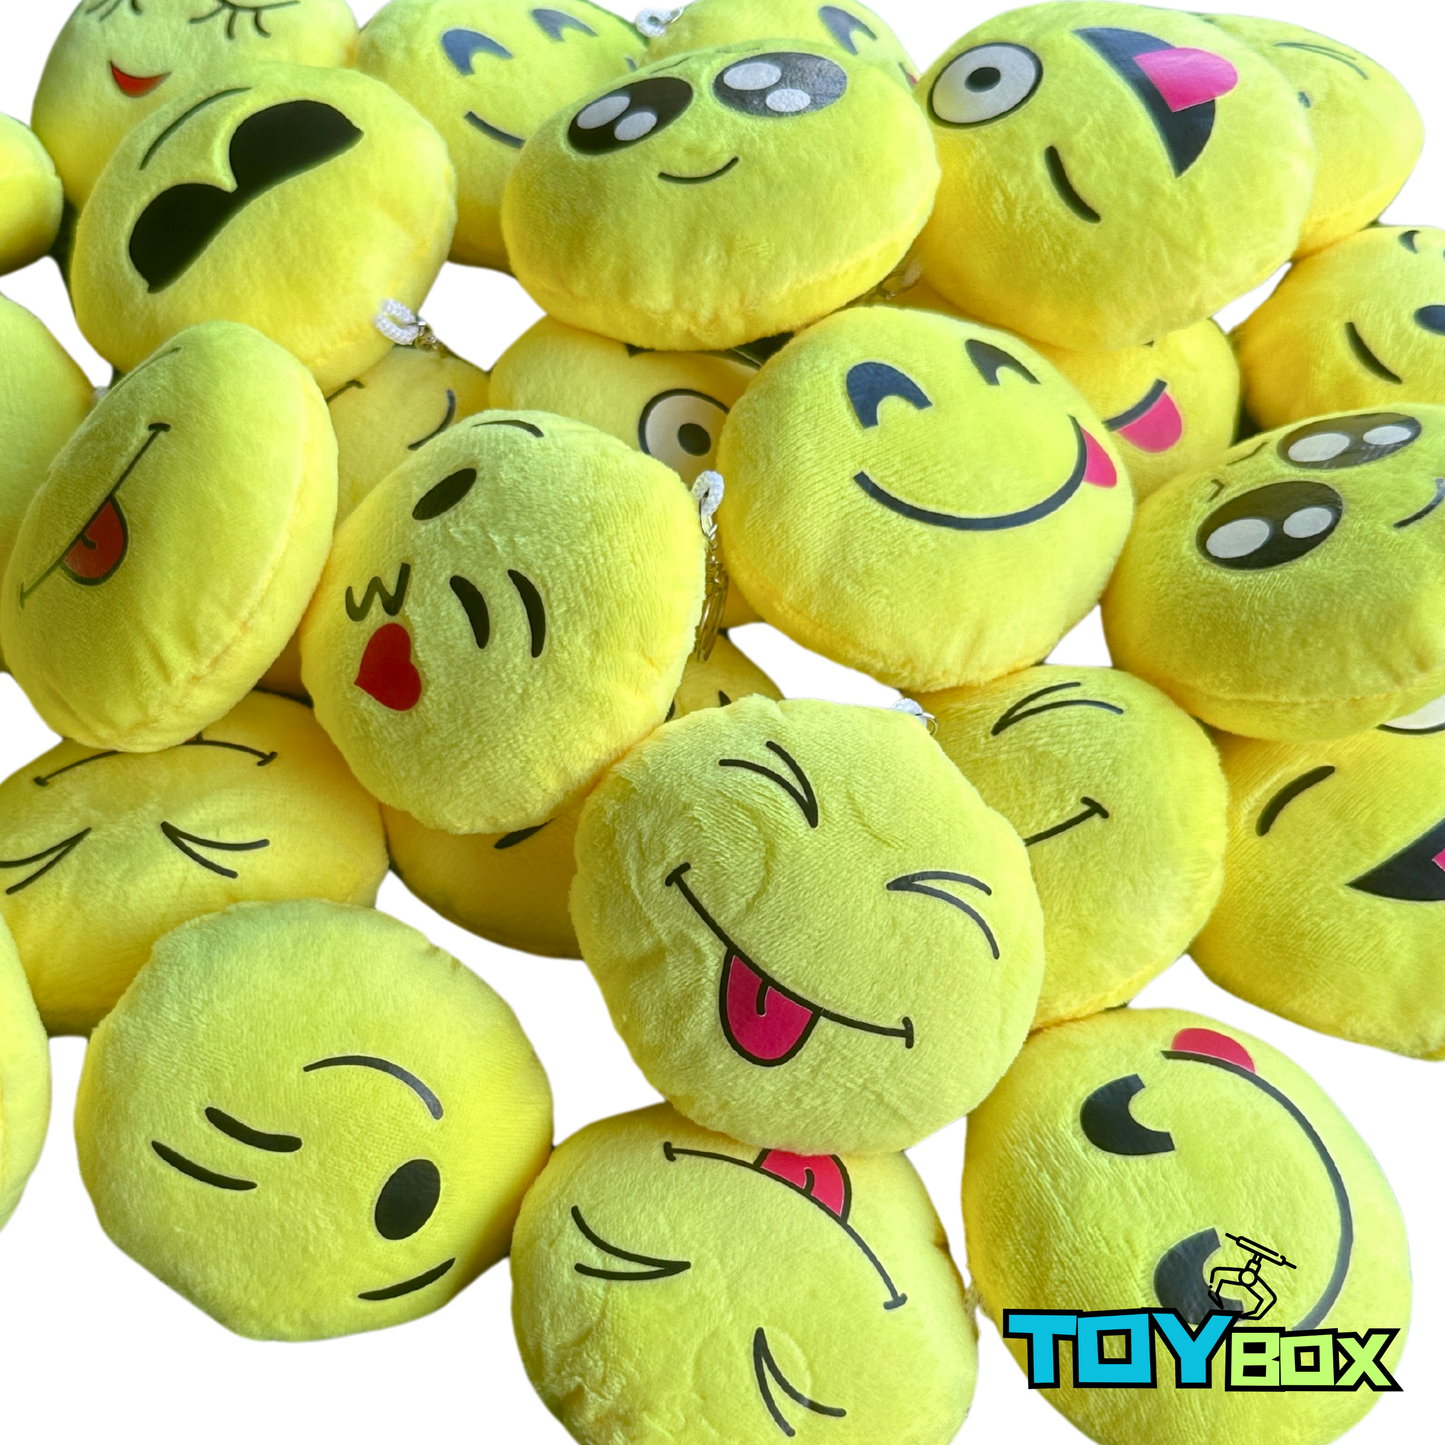 ($.69) 50pc 3" Mixed Emoji Plush